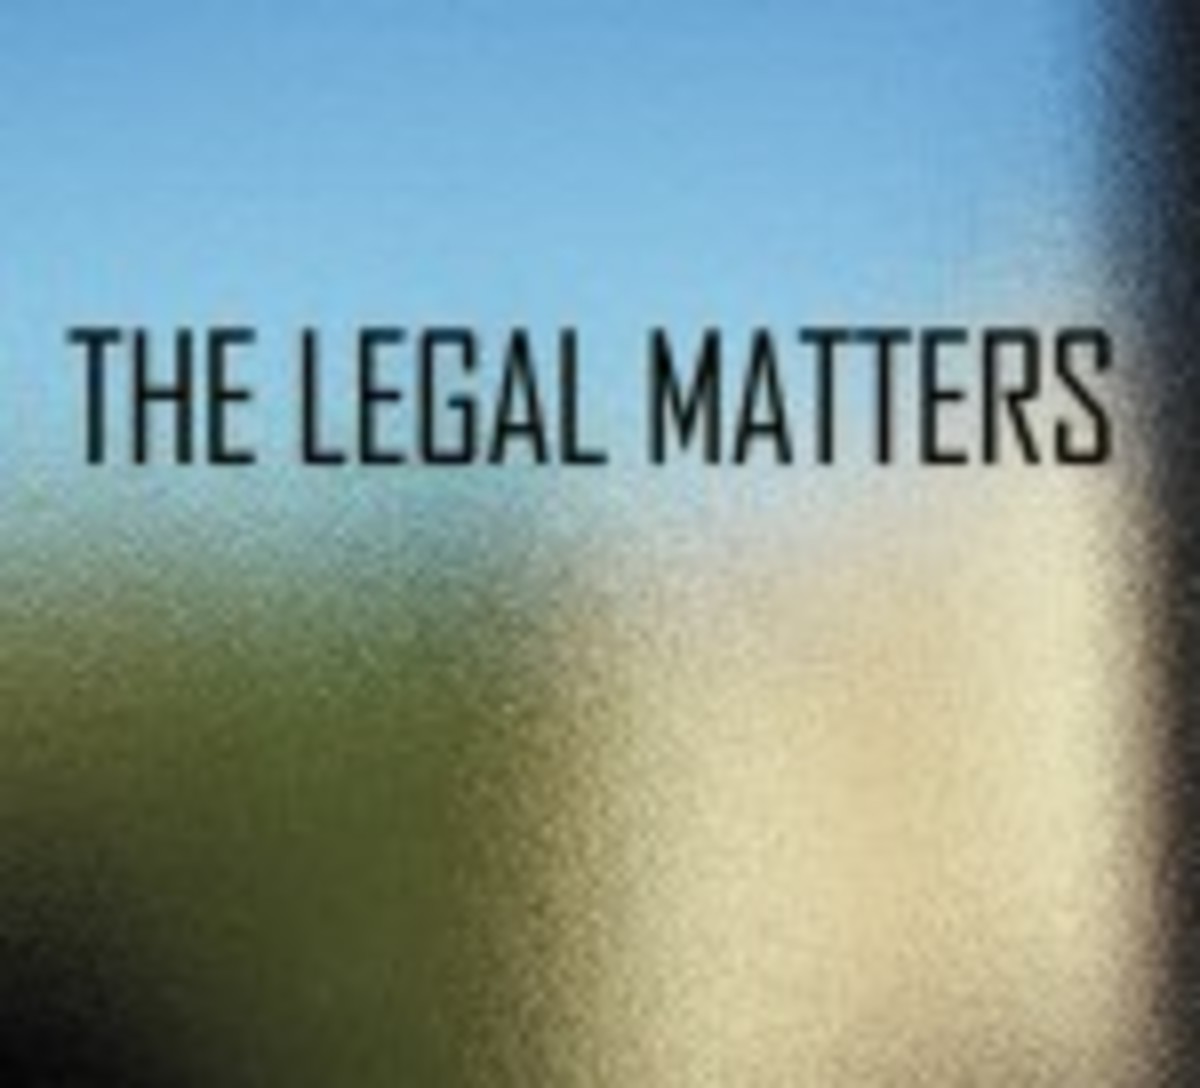 legal matters